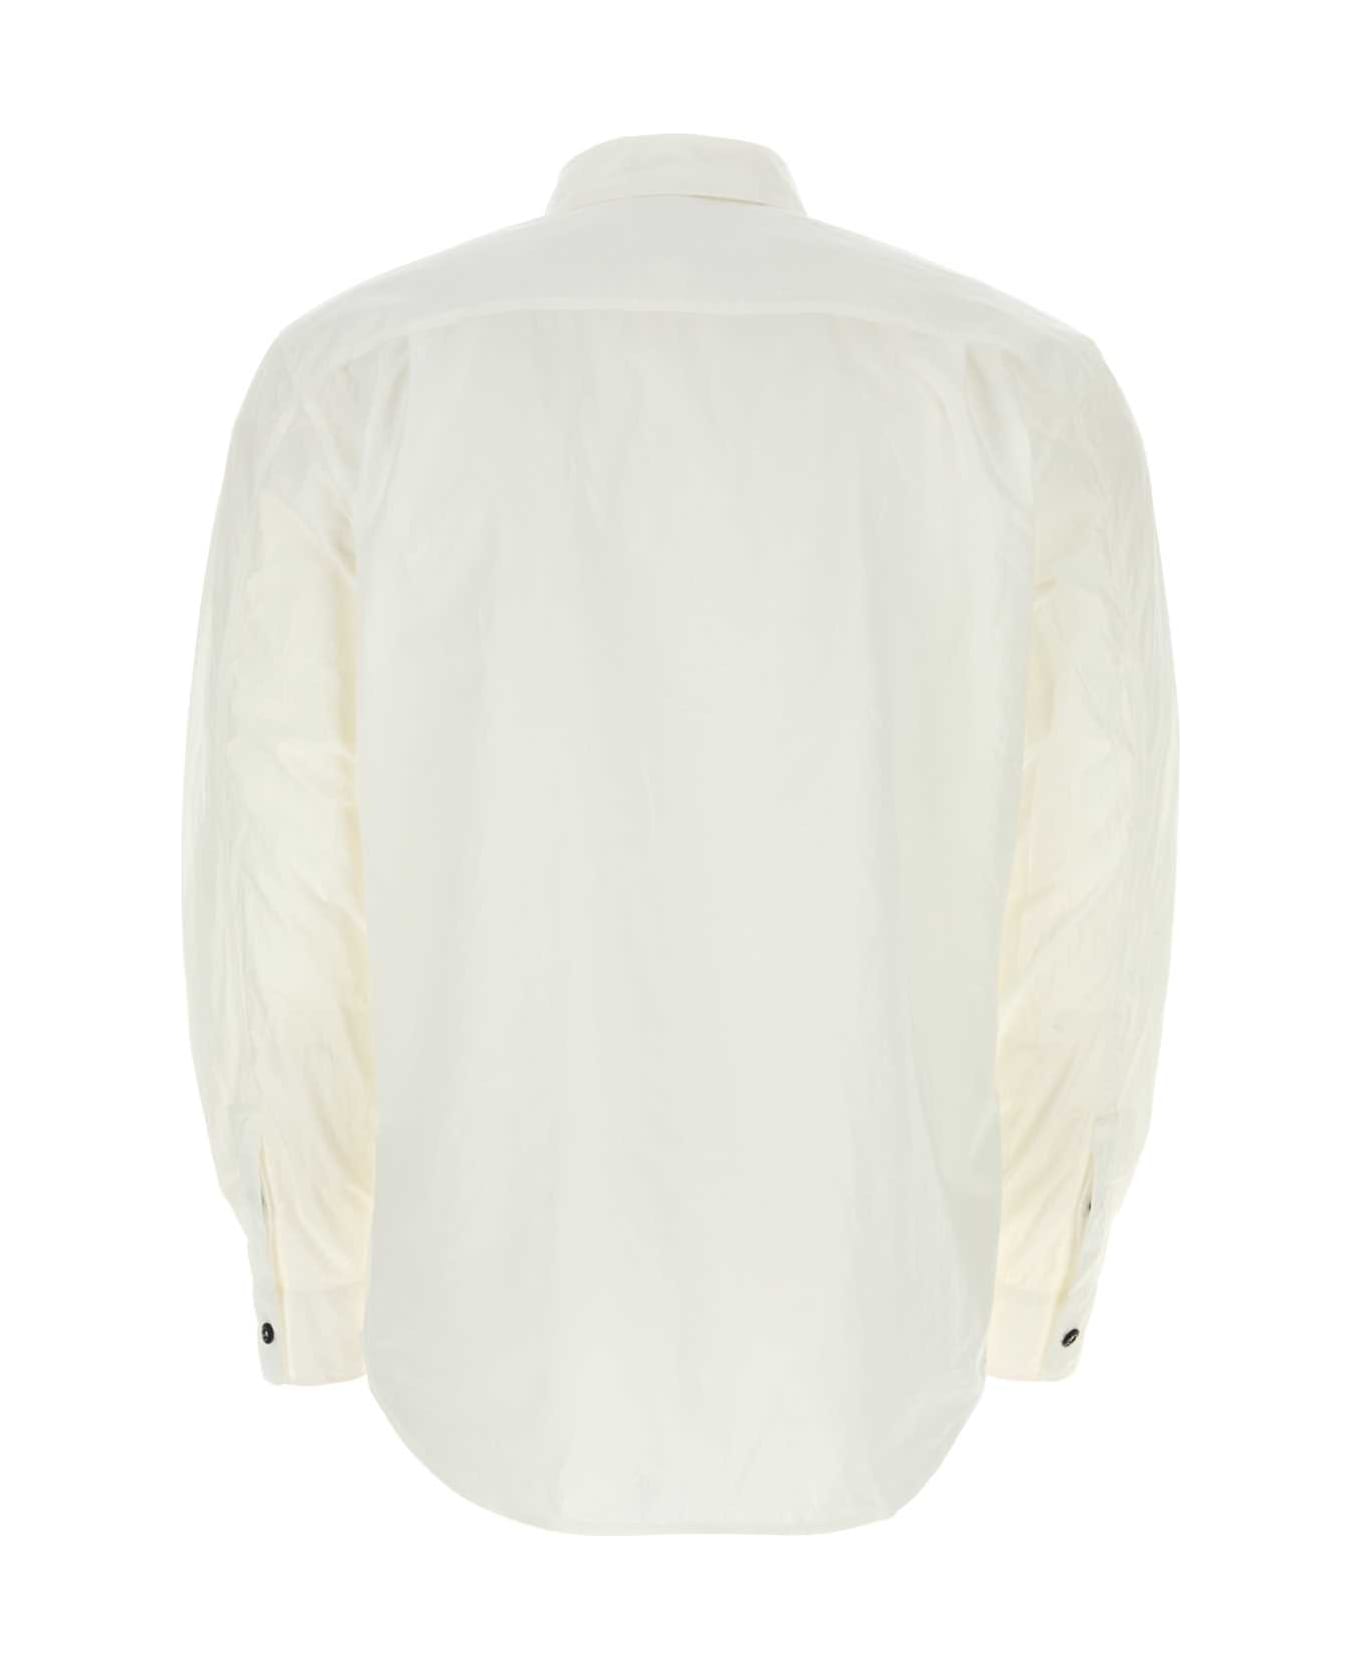 Stone Island White Cotton Shirt - WHITE